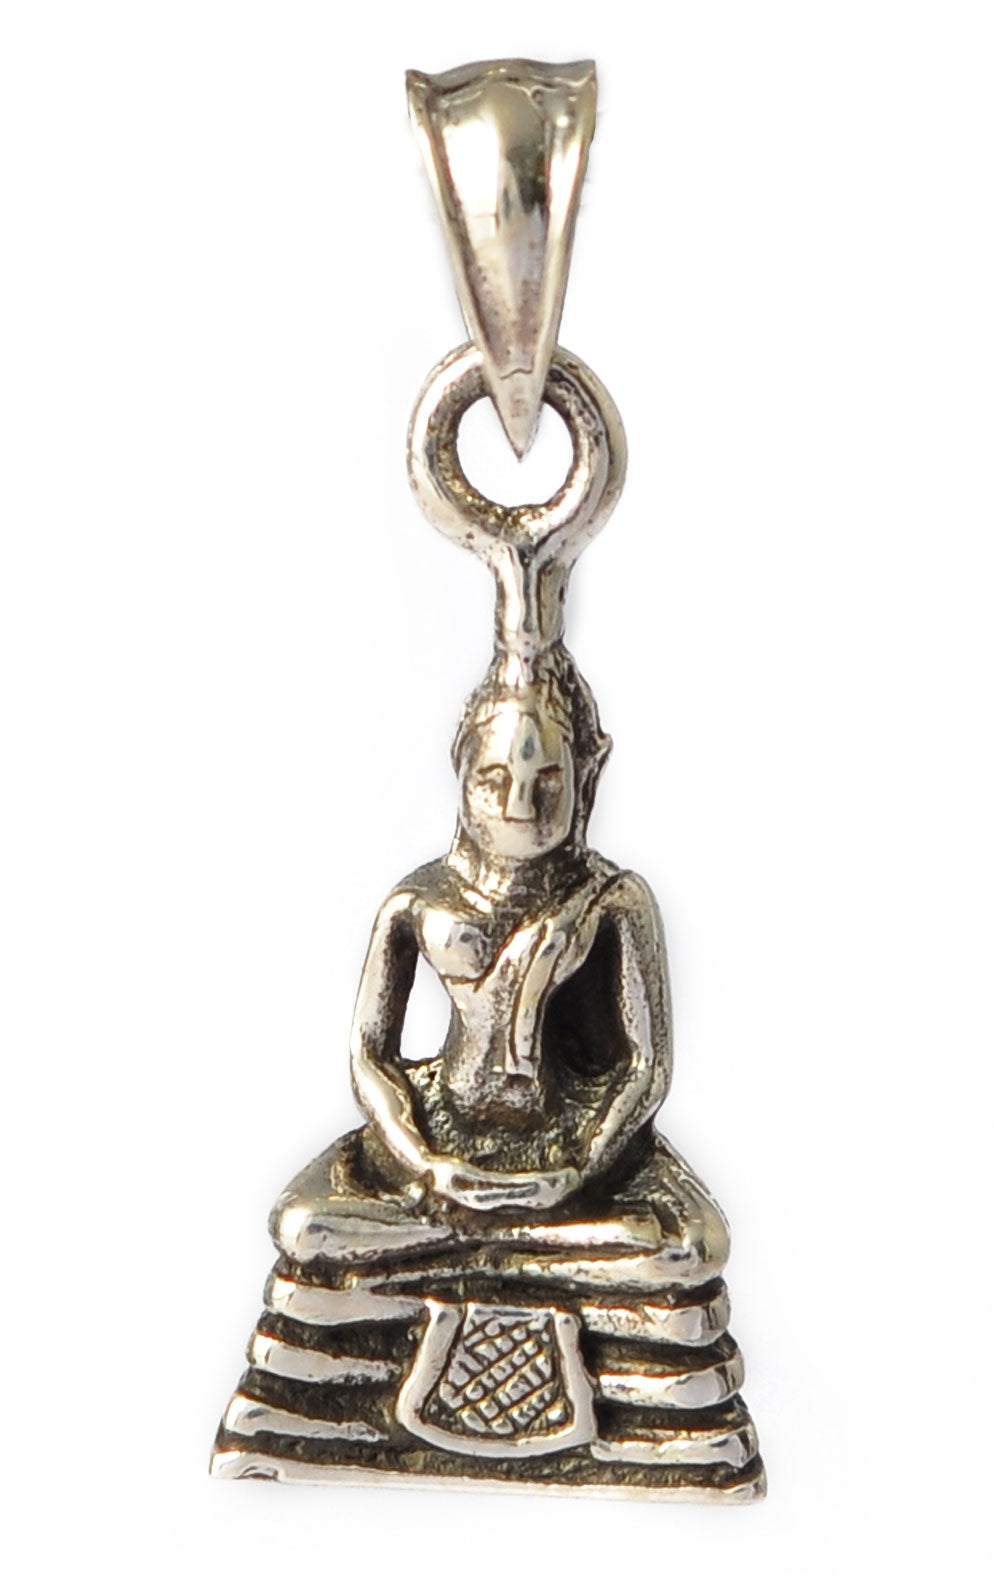 New Handmade Buddha Meditation Gold Brass Charm Necklace Pendant Jewelry With Cotton Cord